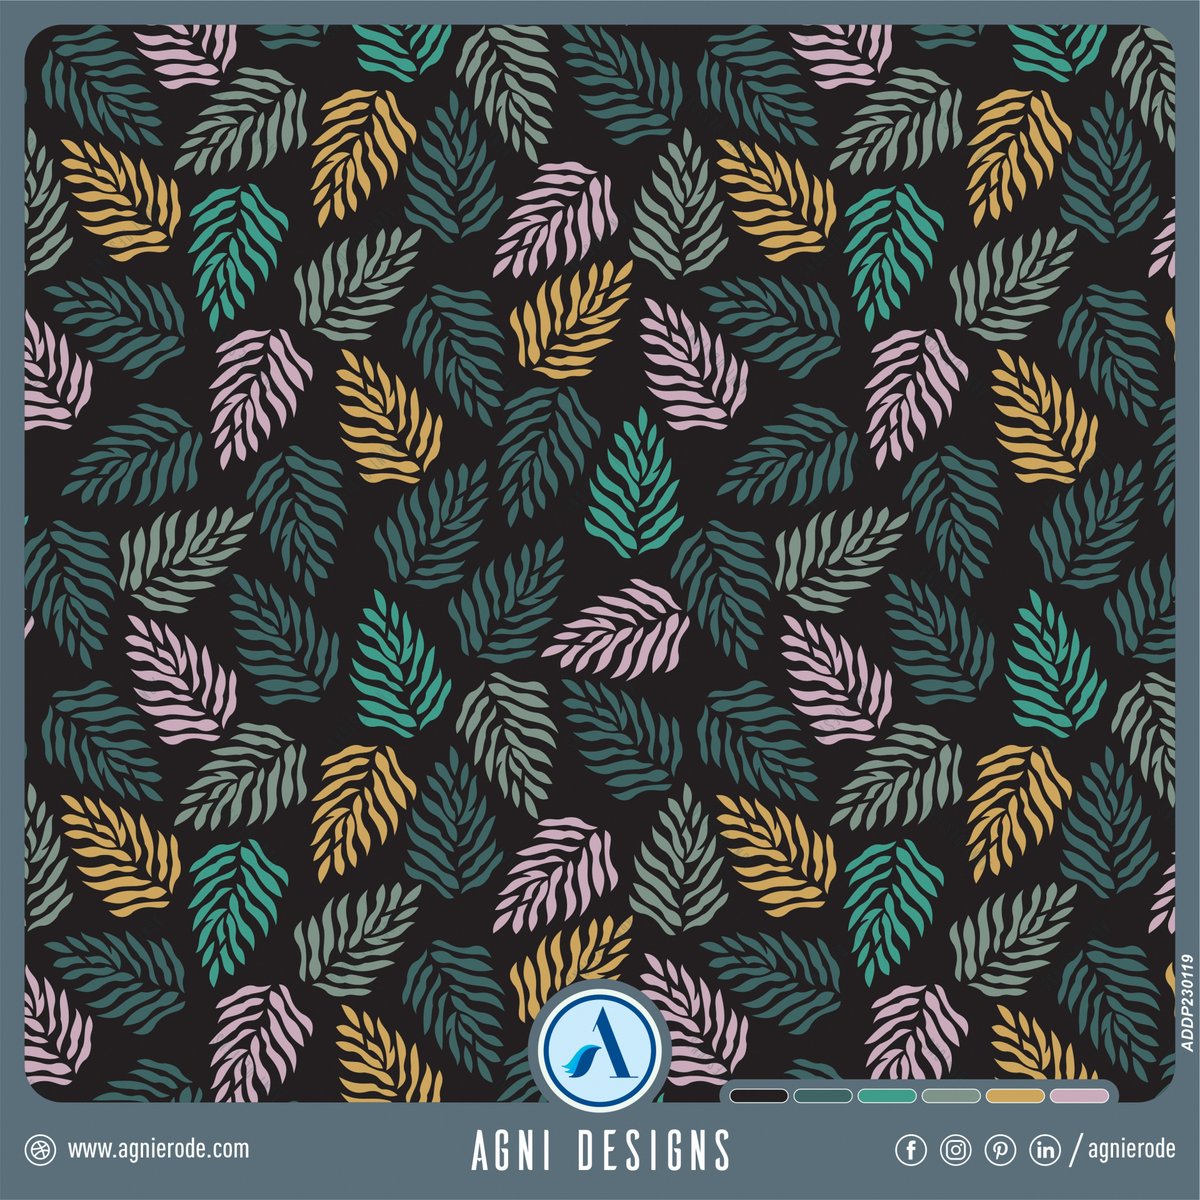 The colorful seamless leaf pattern ❤️
#agnidesigns #textiledesign #textiledesigning #textileprinting #textilepattern #patterndesign #patternprint #hometextile #repeatpattern #blockprint #karurdesigning #seamlesspattern #designer #homefurnishings #leafpattern #leaves